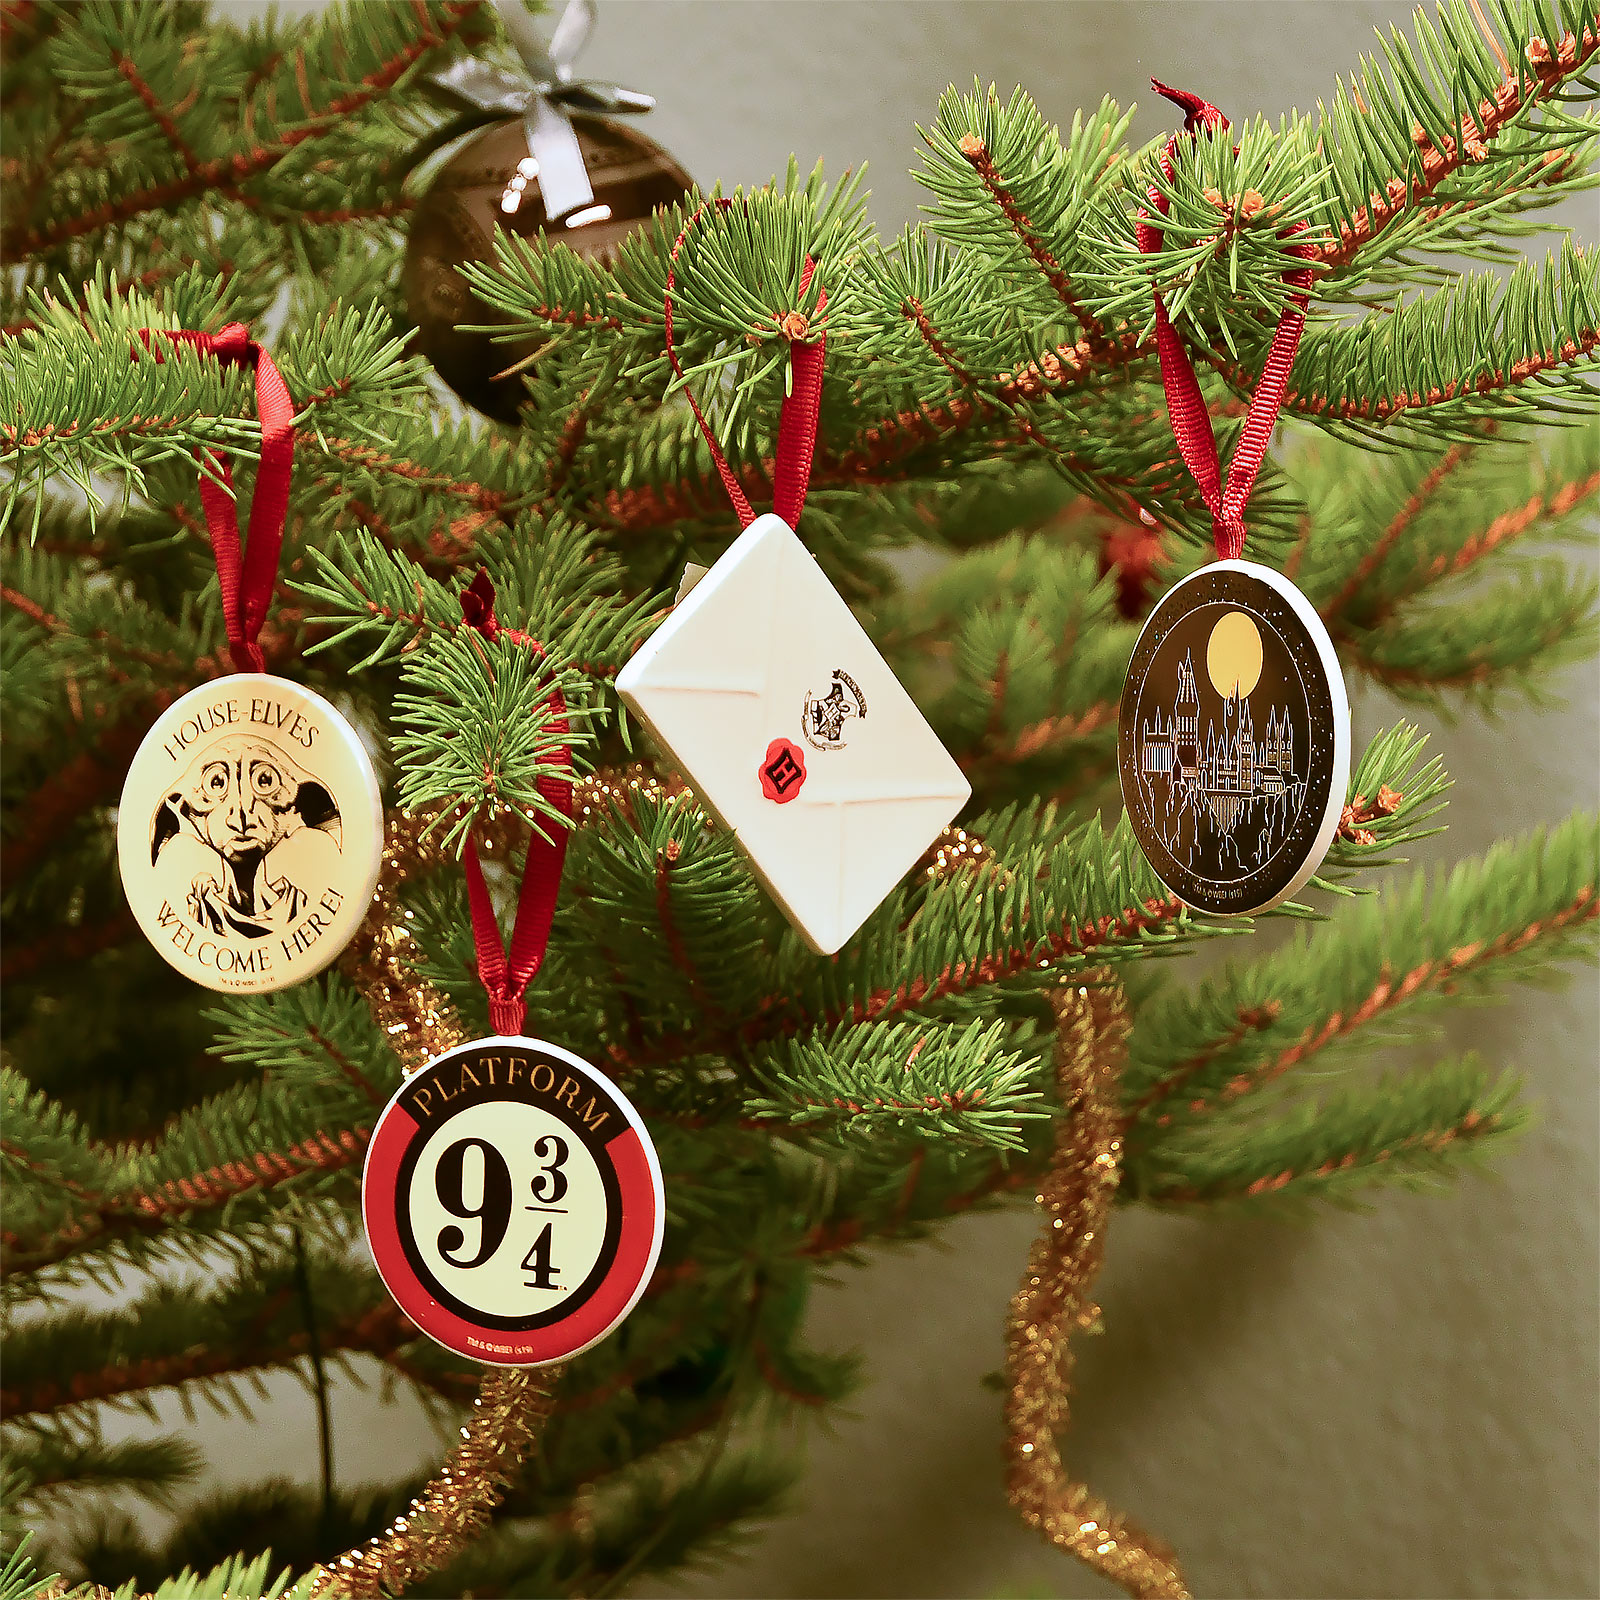 Harry Potter - Christmas tree decoration